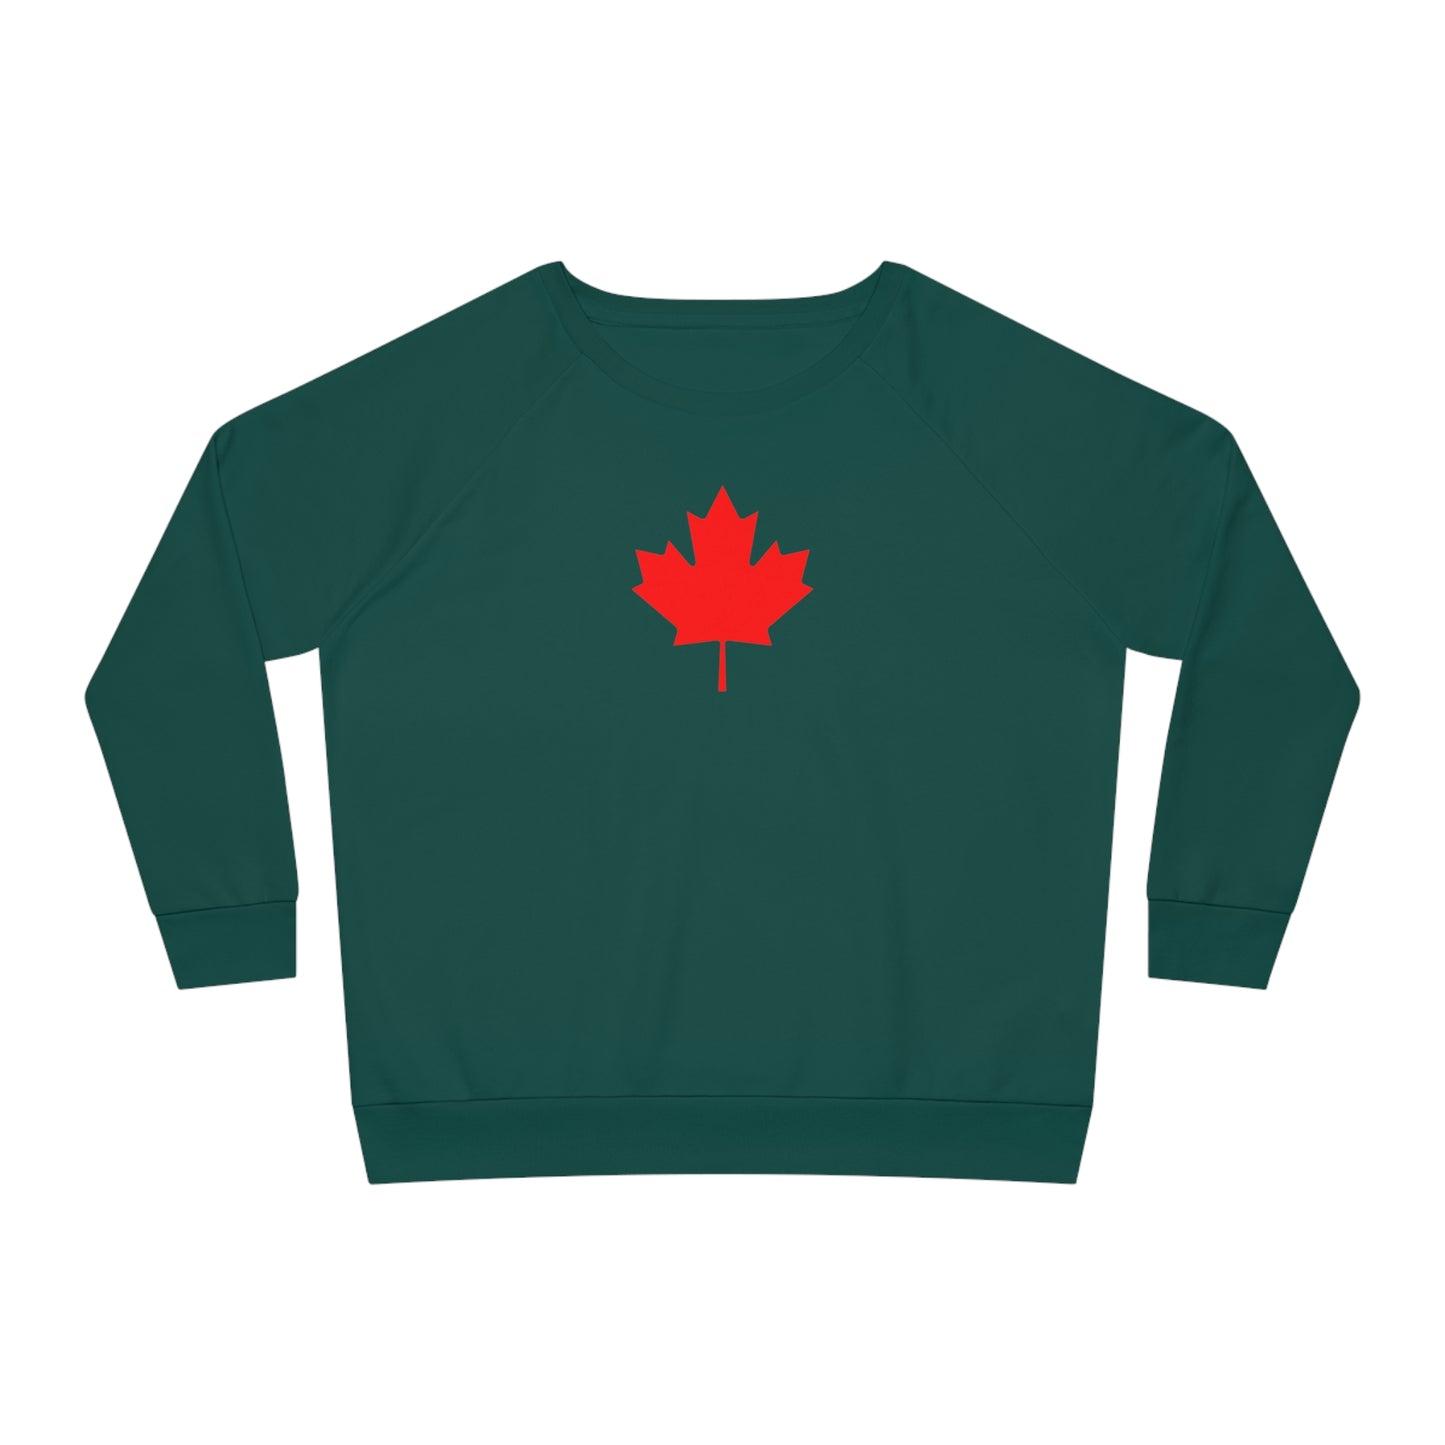 Women's Dazzler Relaxed Fit Sweatshirt, Canadian Maple Leaf